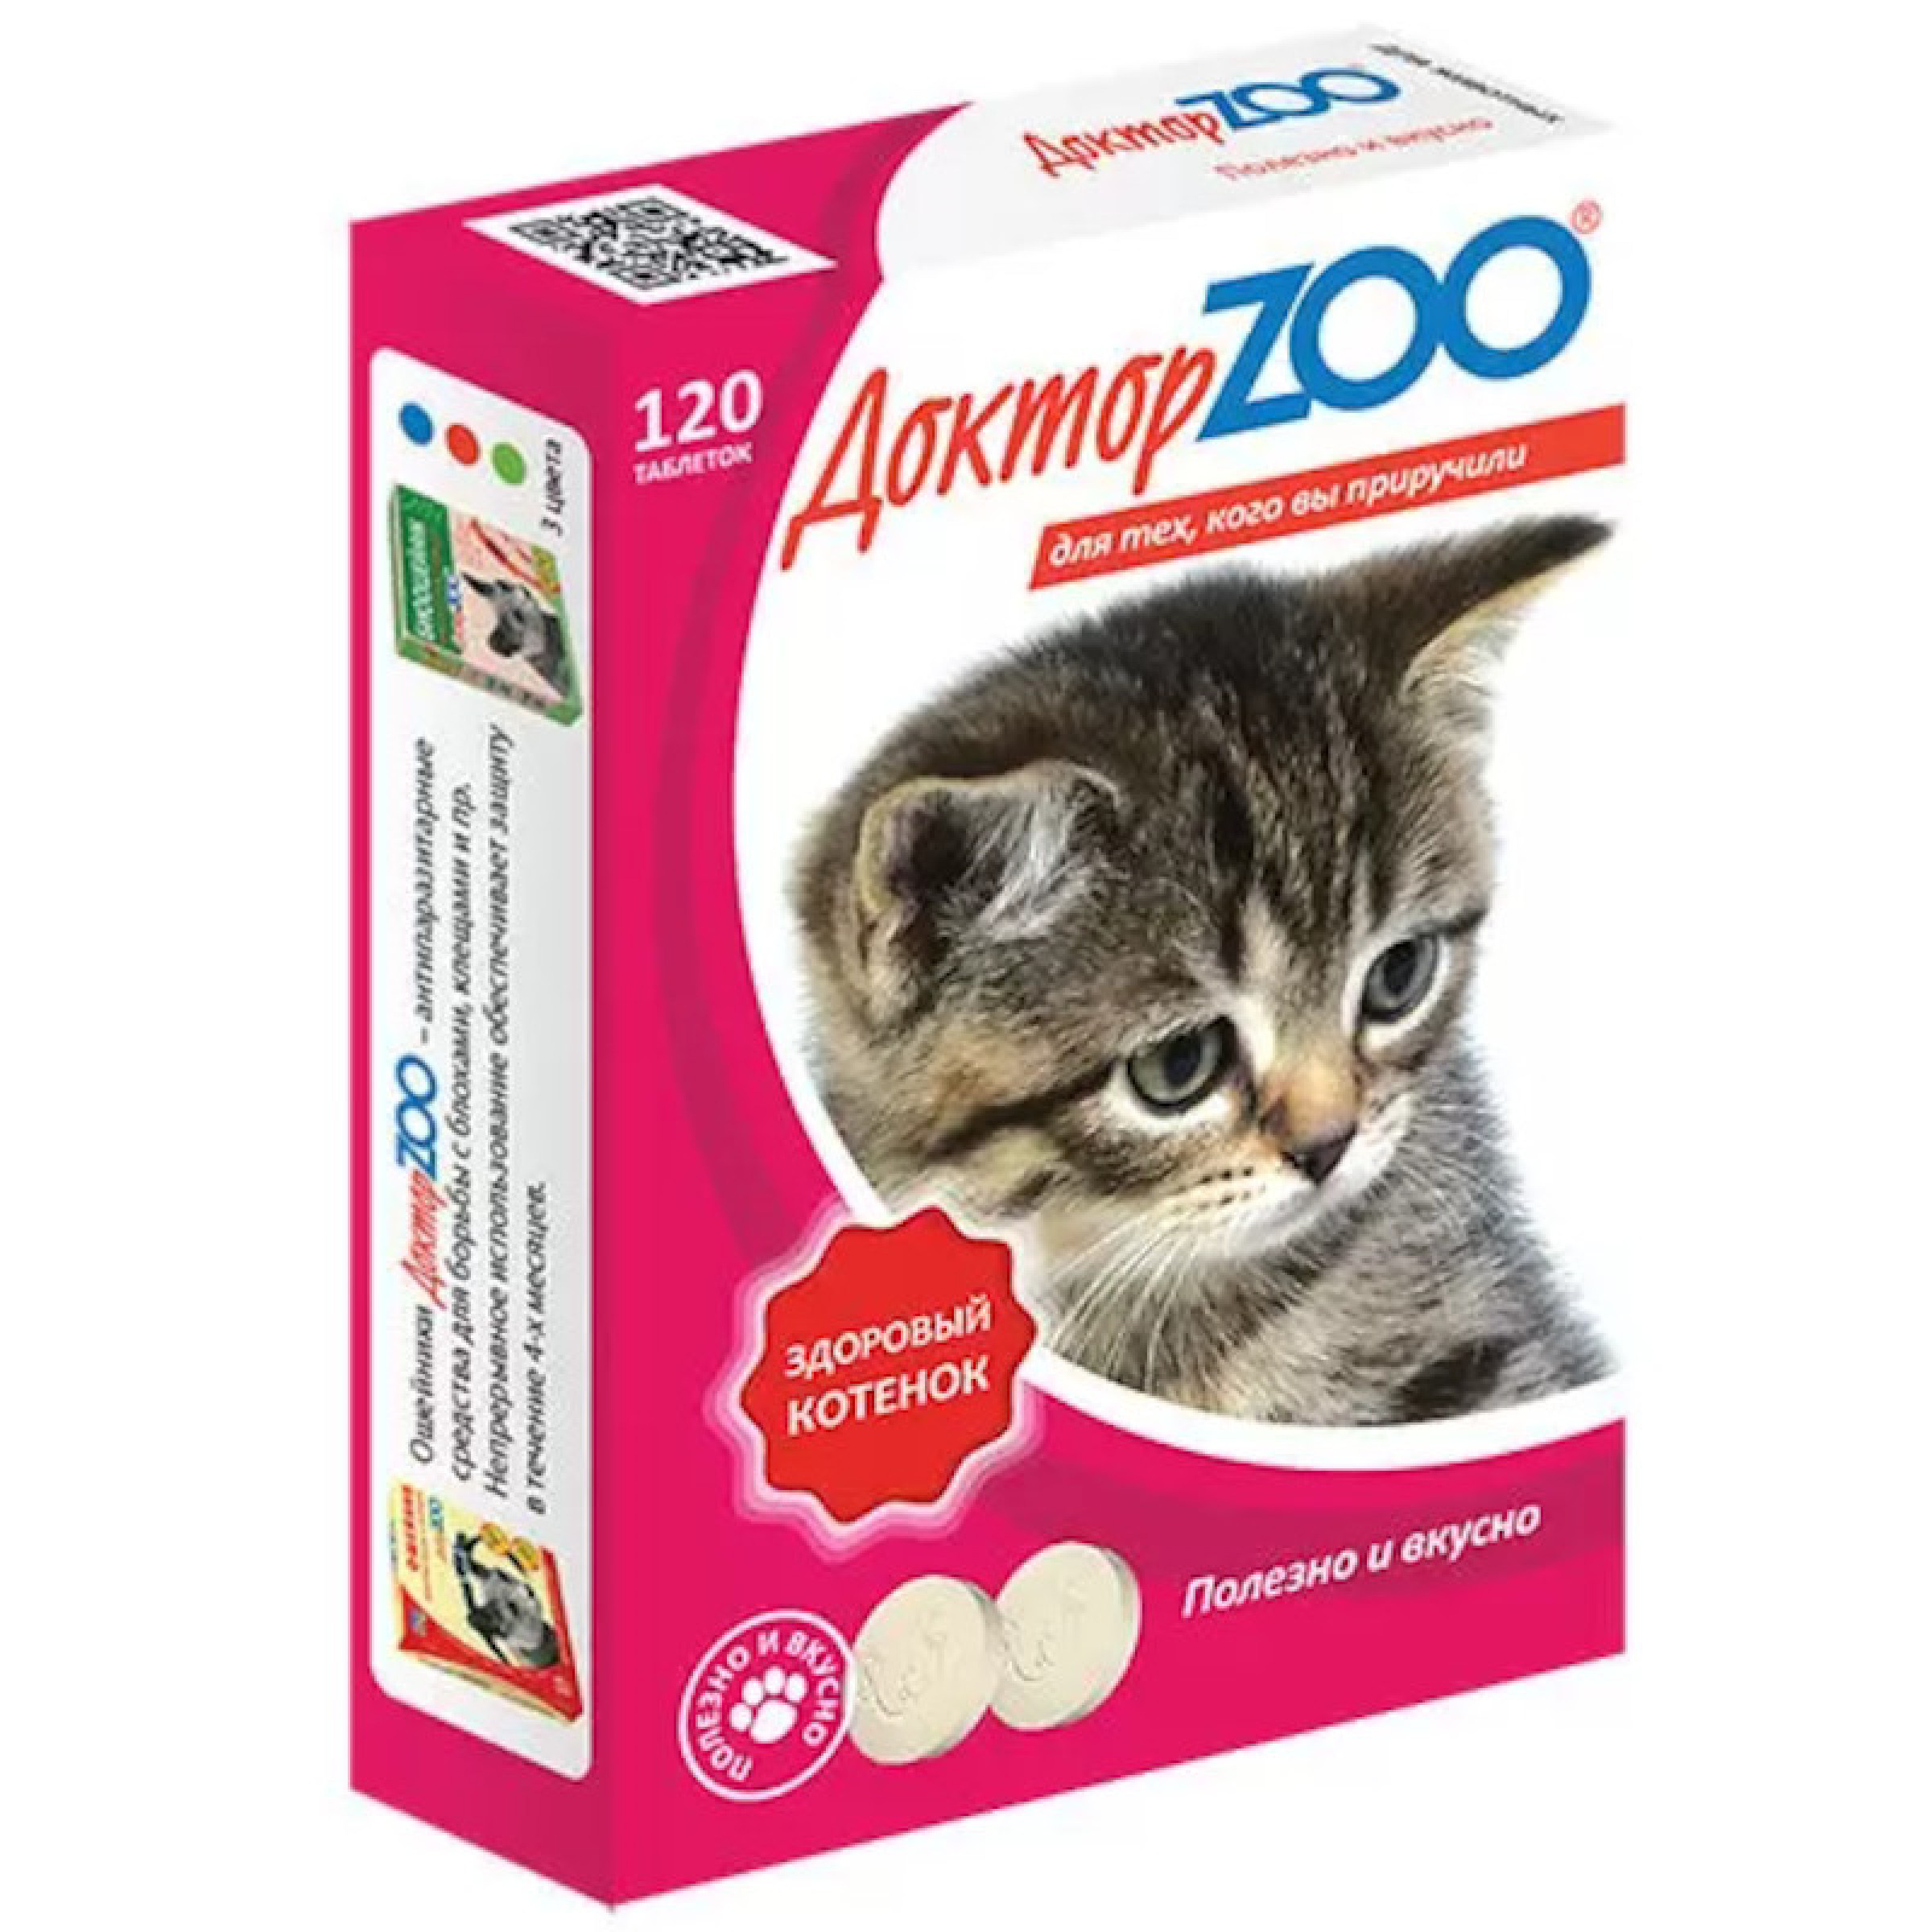 Витамины Доктор Zoo Здоровый котенок, 120 таблеток